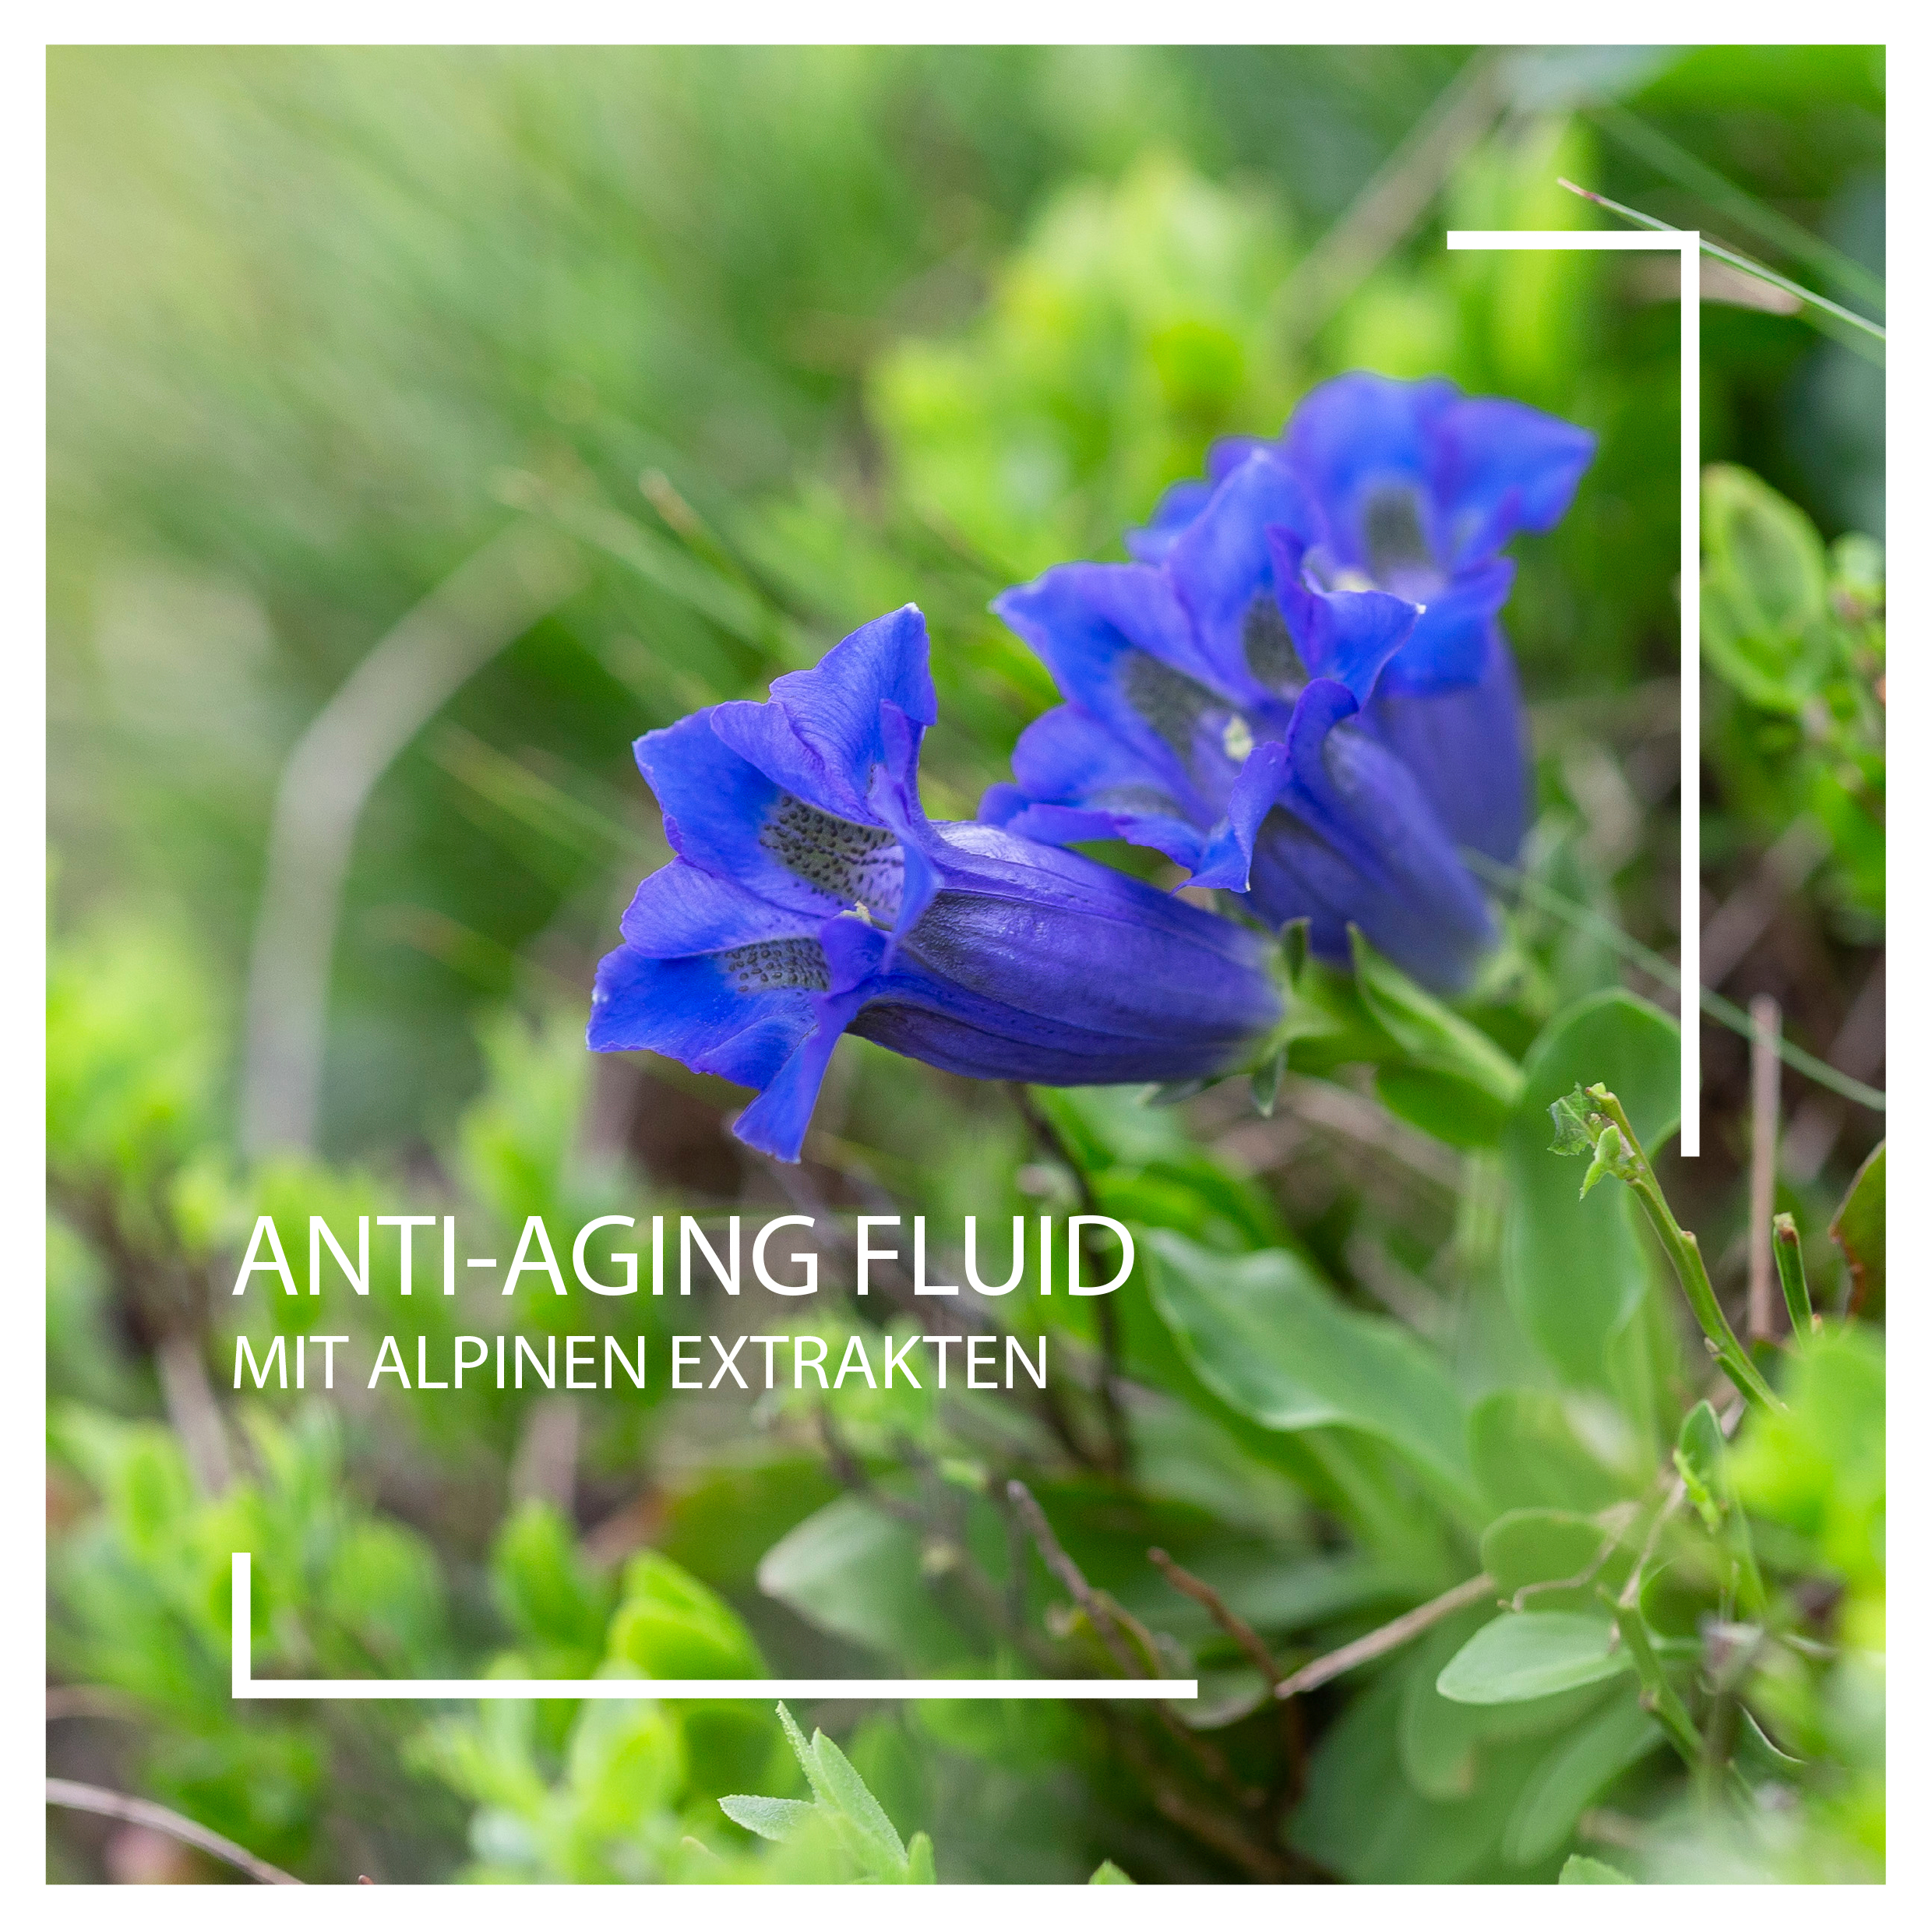 Anti-Aging Fluid mit alpinen Extrakten I Beautyspa I Foto: shutterstock.com/Ihor Hvozdetskyi